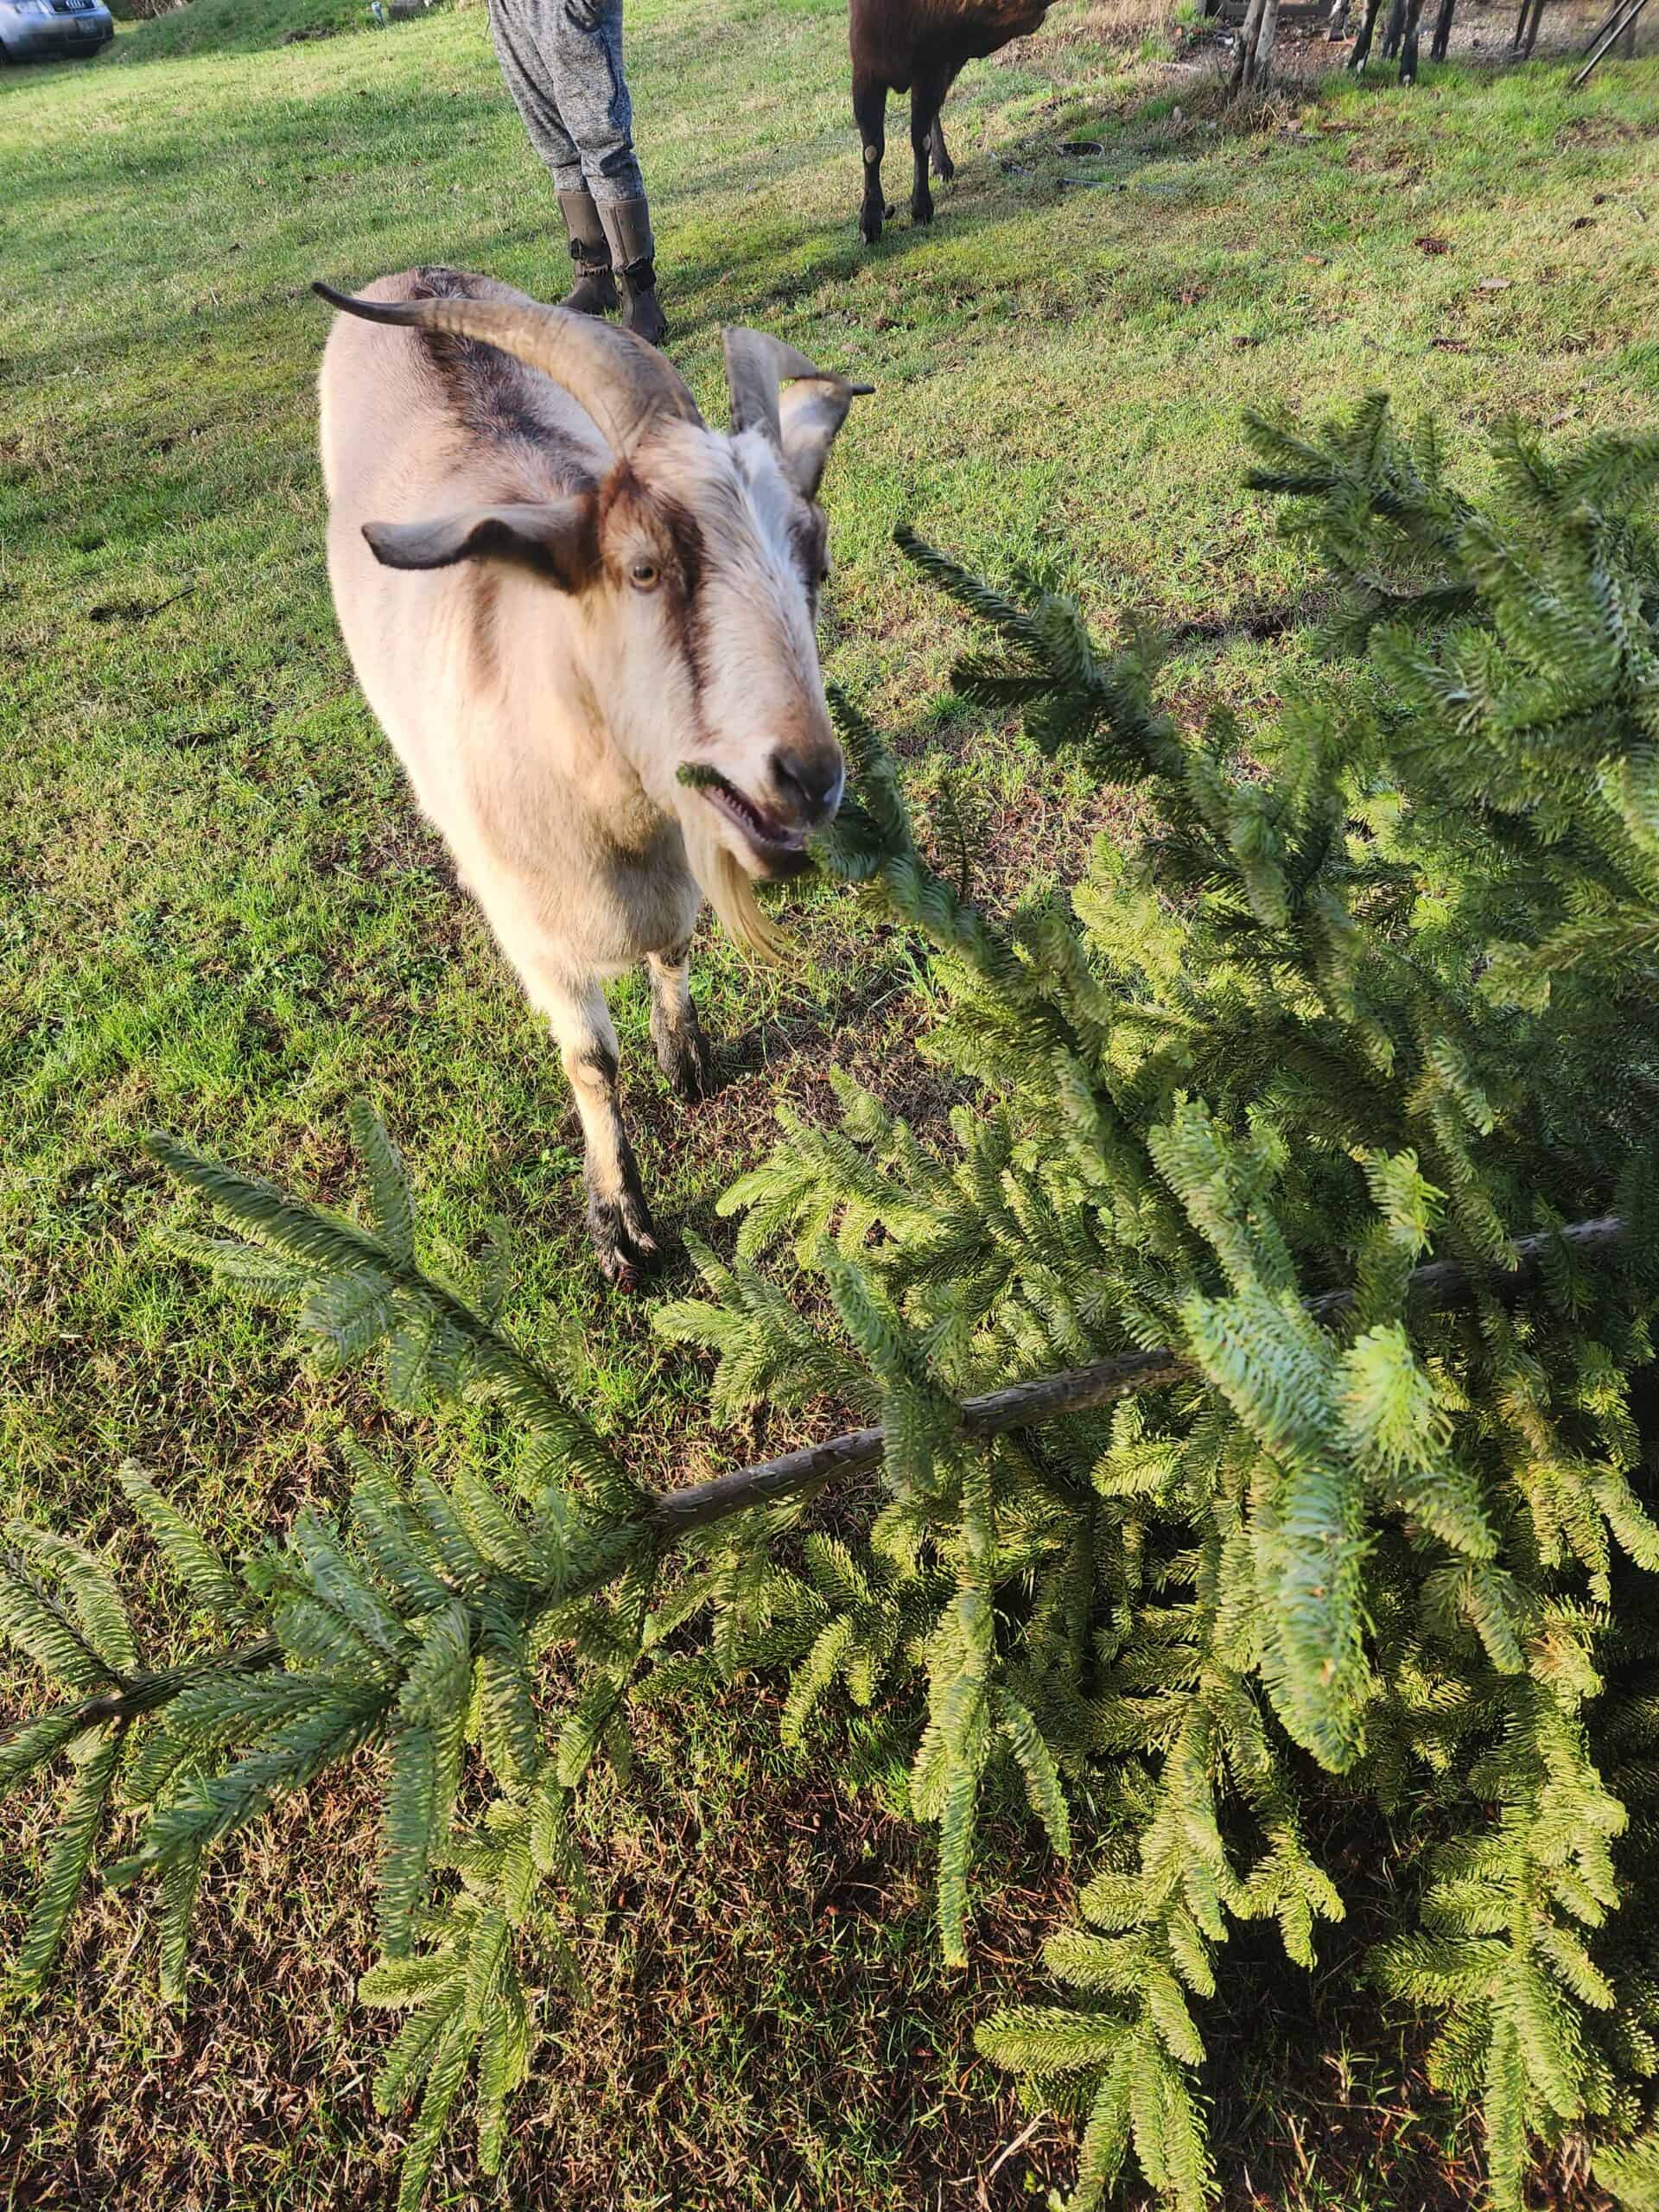 Iko the goat as a pet eating a xmas tree